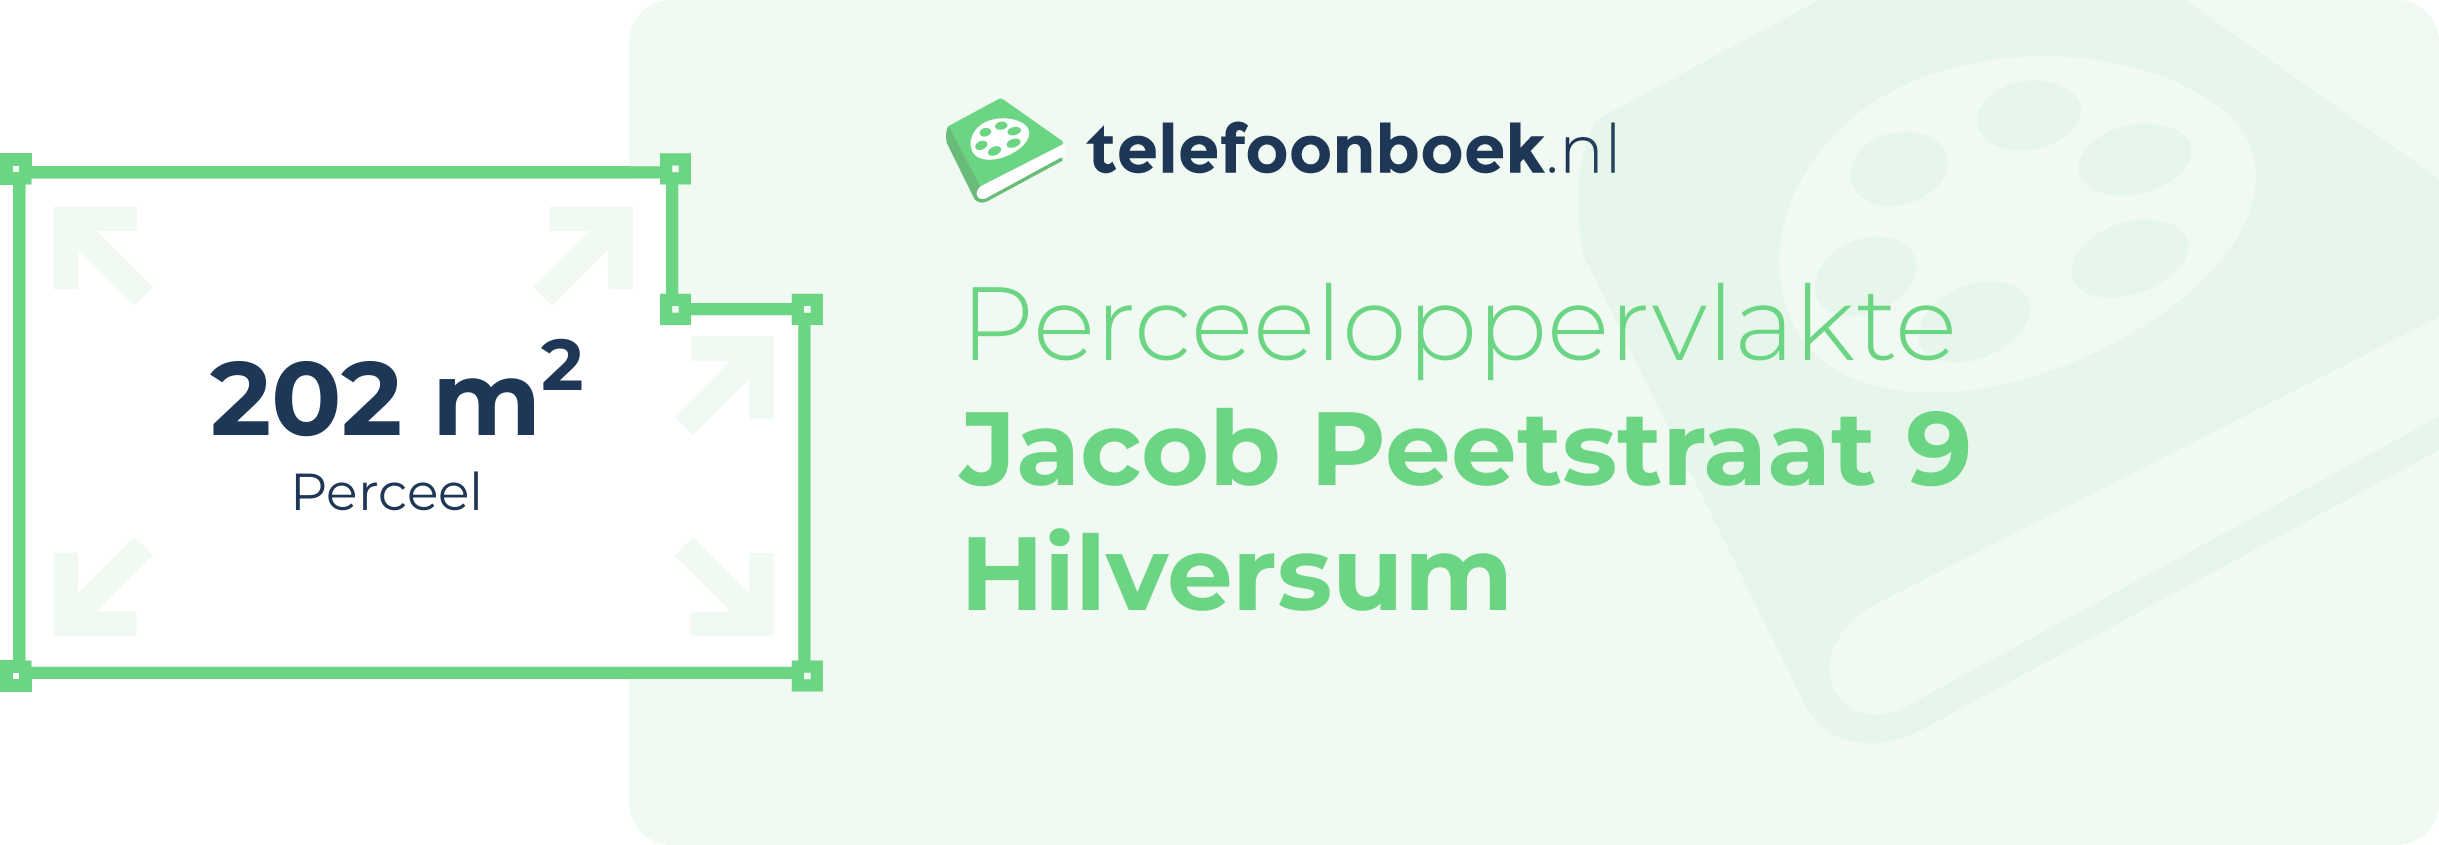 Perceeloppervlakte Jacob Peetstraat 9 Hilversum